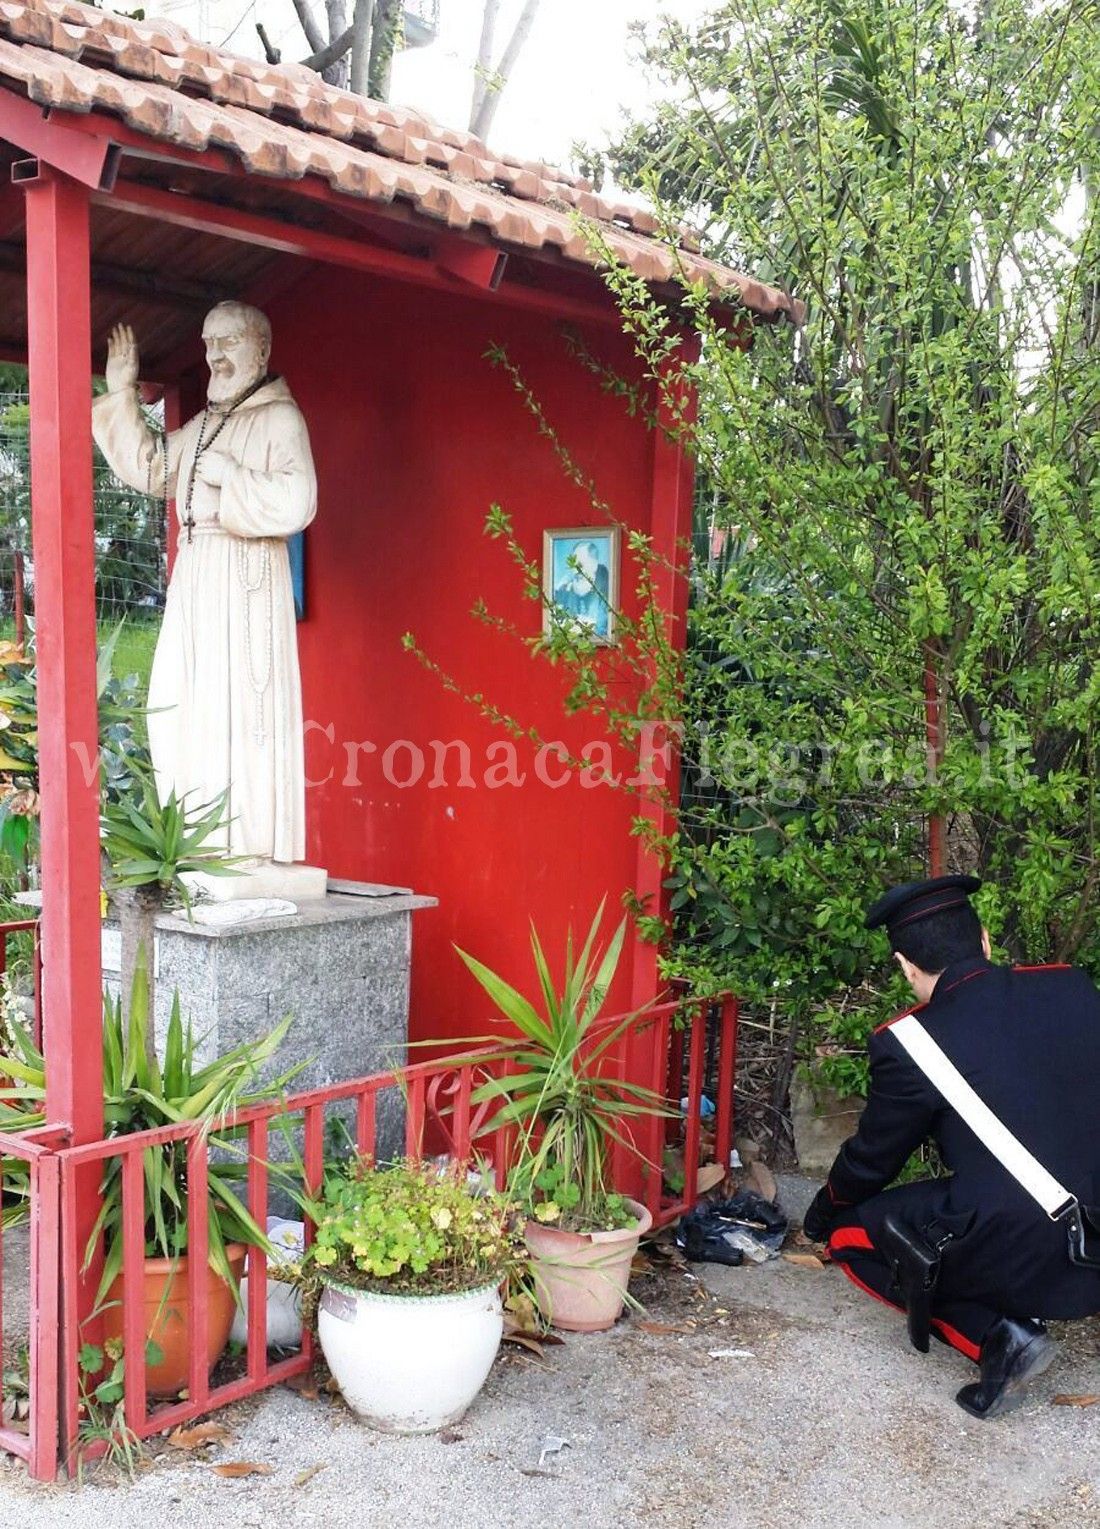 Tenta di estorcere una statua di Padre Pio: arrestato